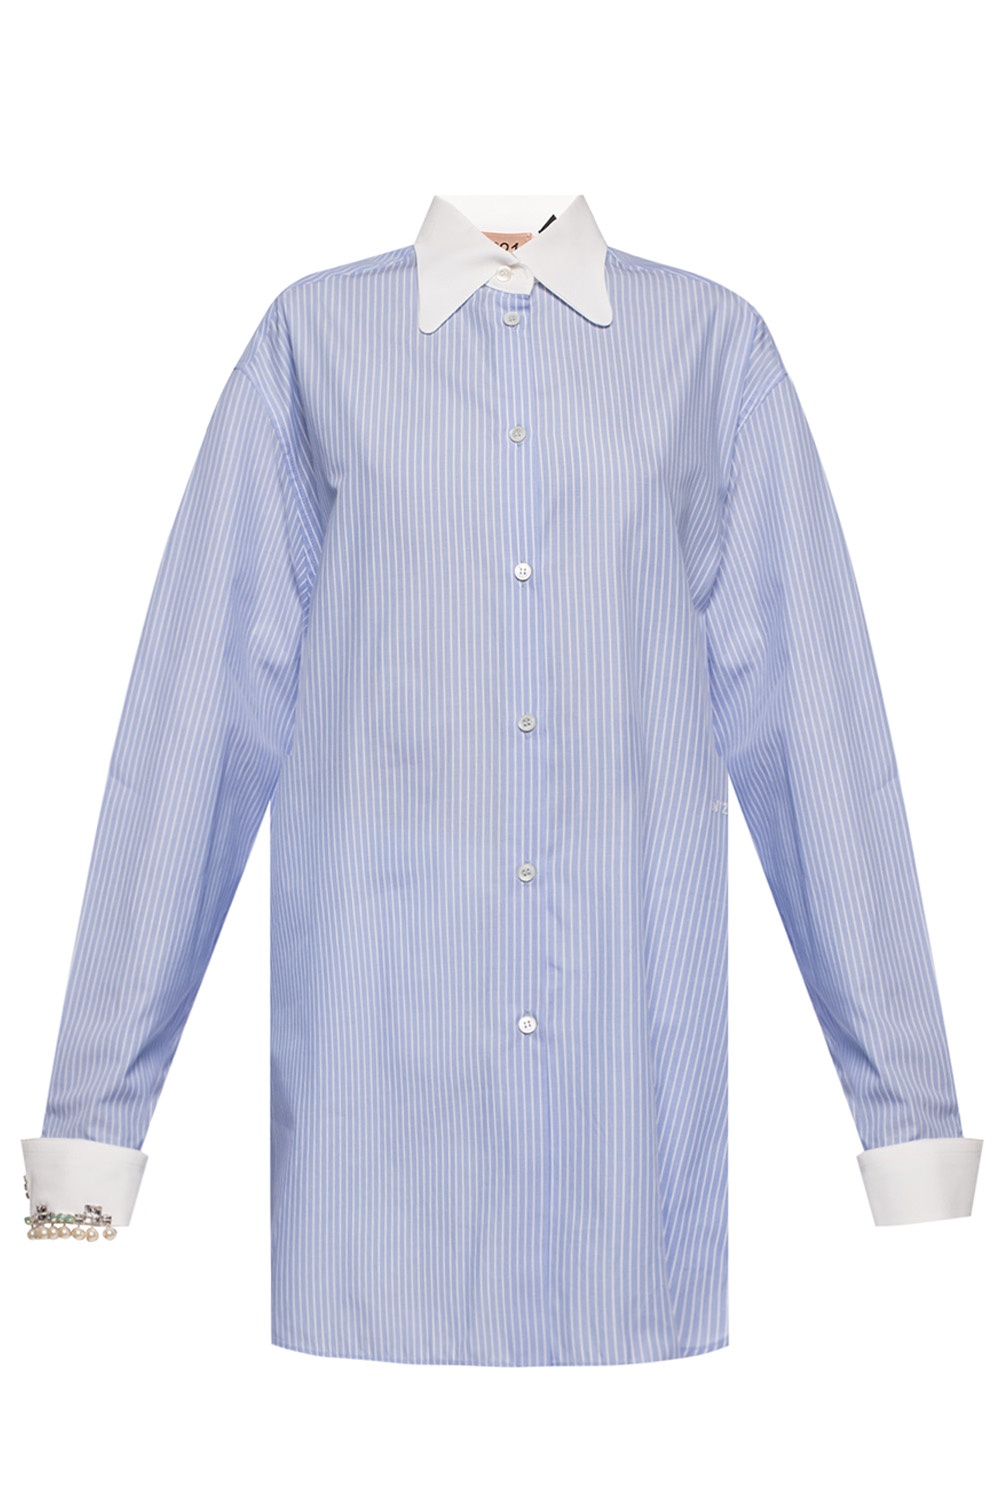 Womens Tops N°21 Tops N°21 Striped Cotton Shirt in Blue 